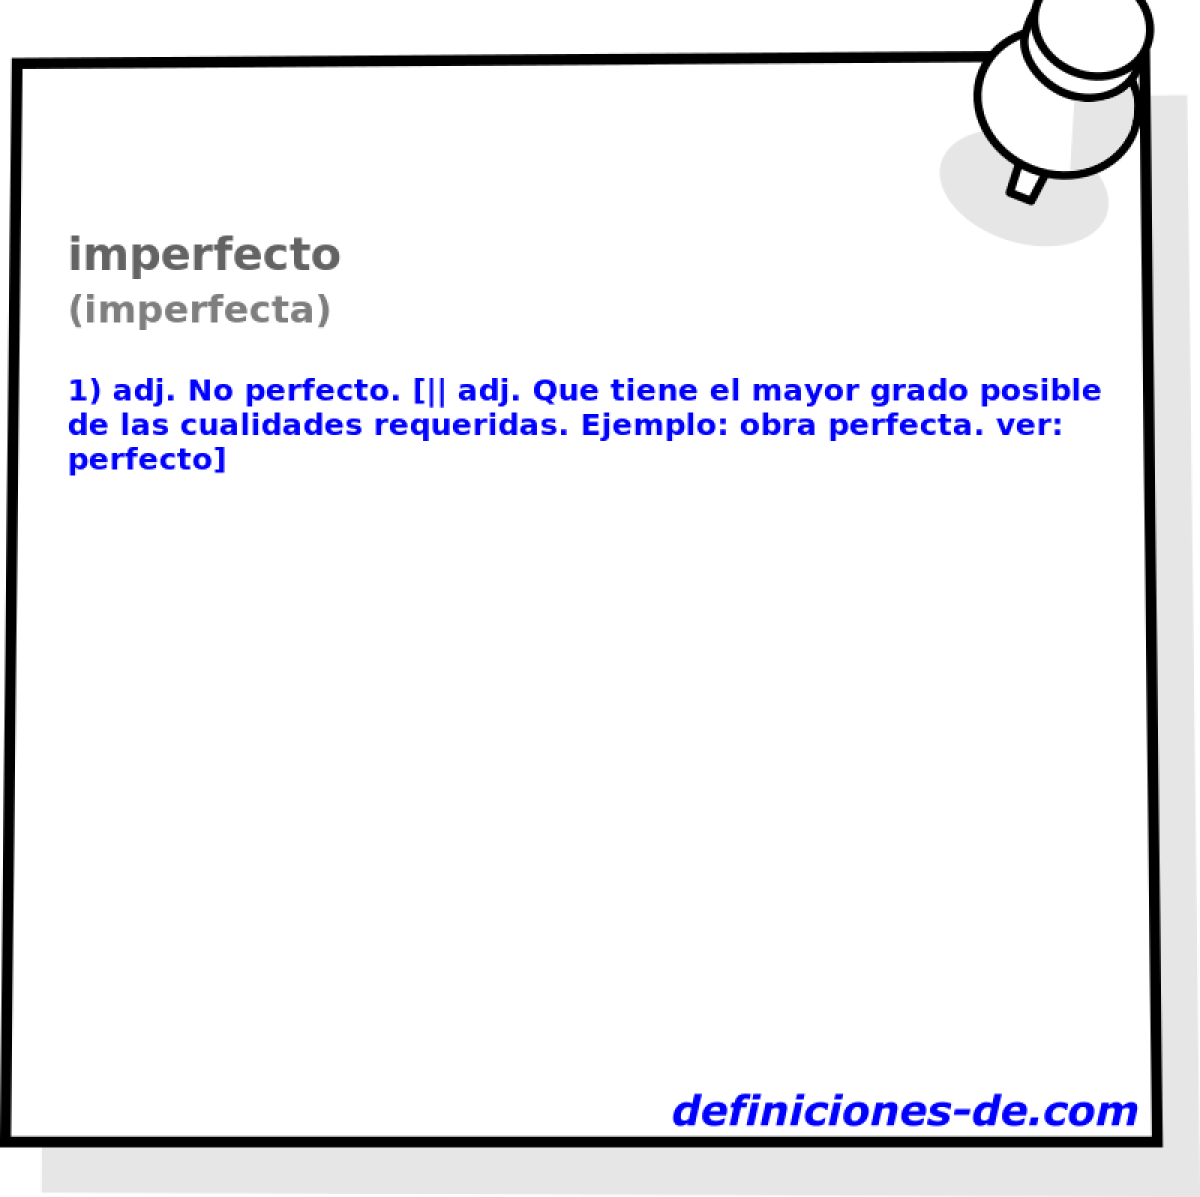 imperfecto (imperfecta)